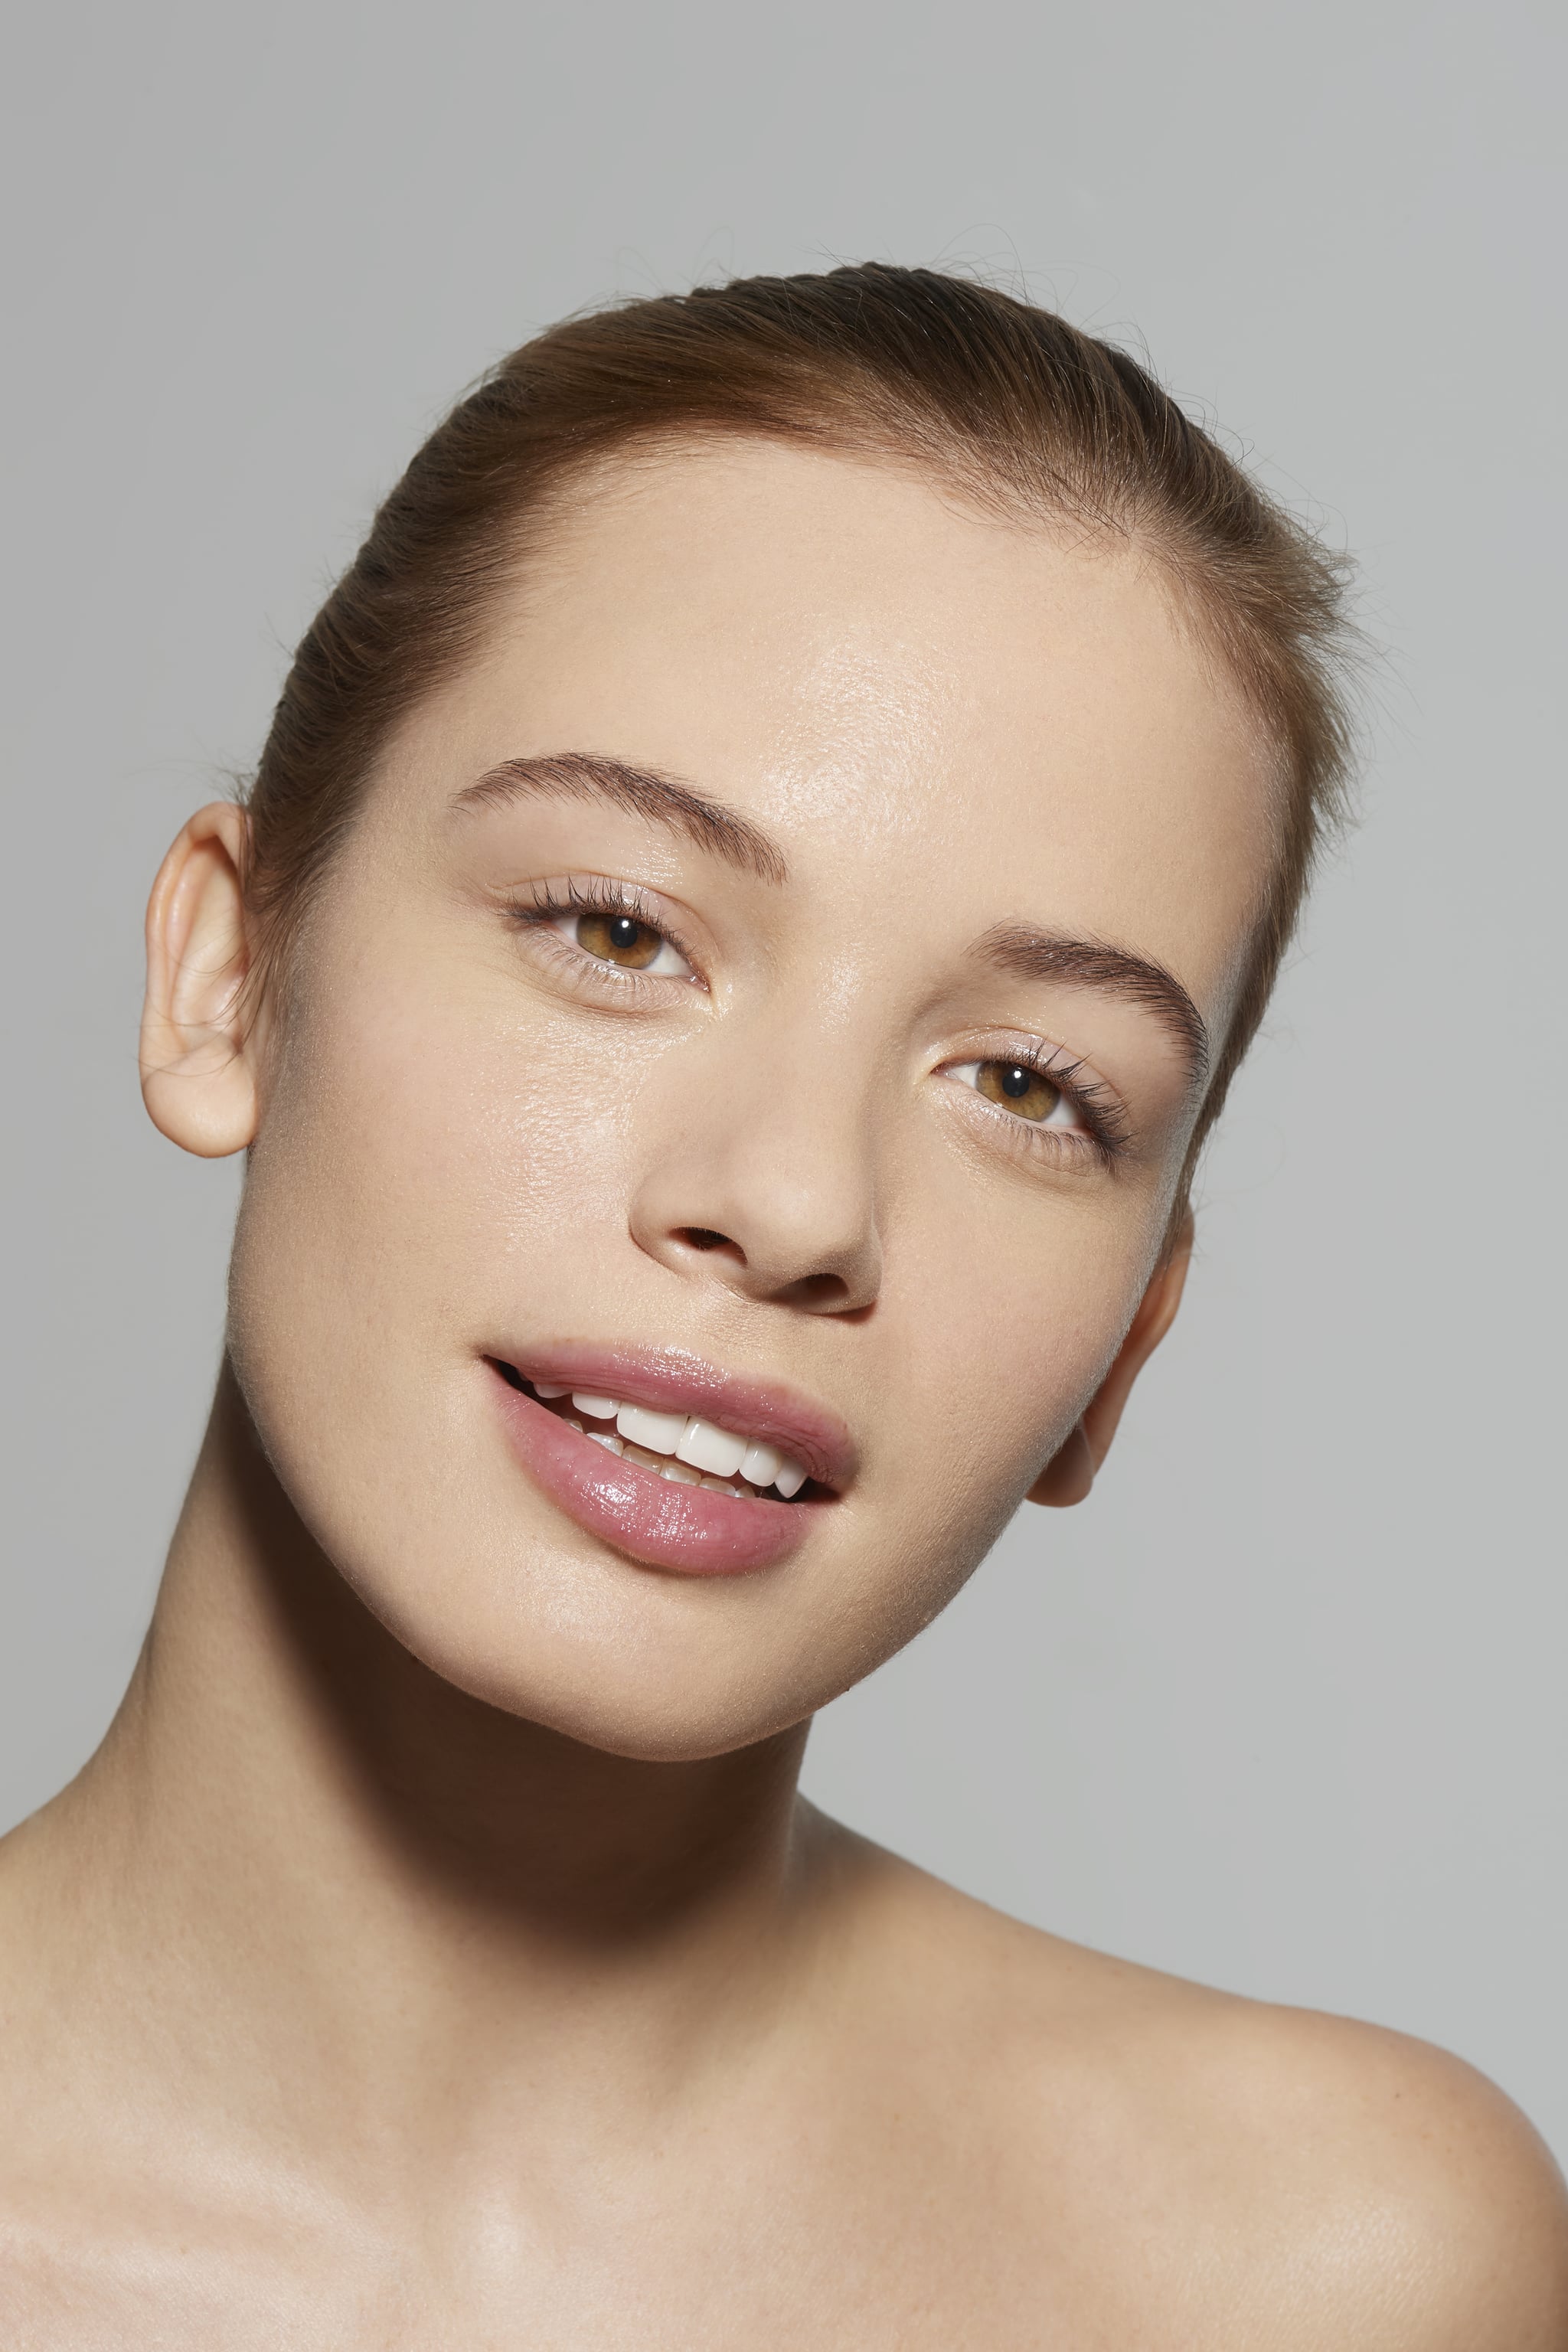 mm leninismen typisk Can Your Skin Really Breathe When You Skip Makeup? | POPSUGAR Beauty